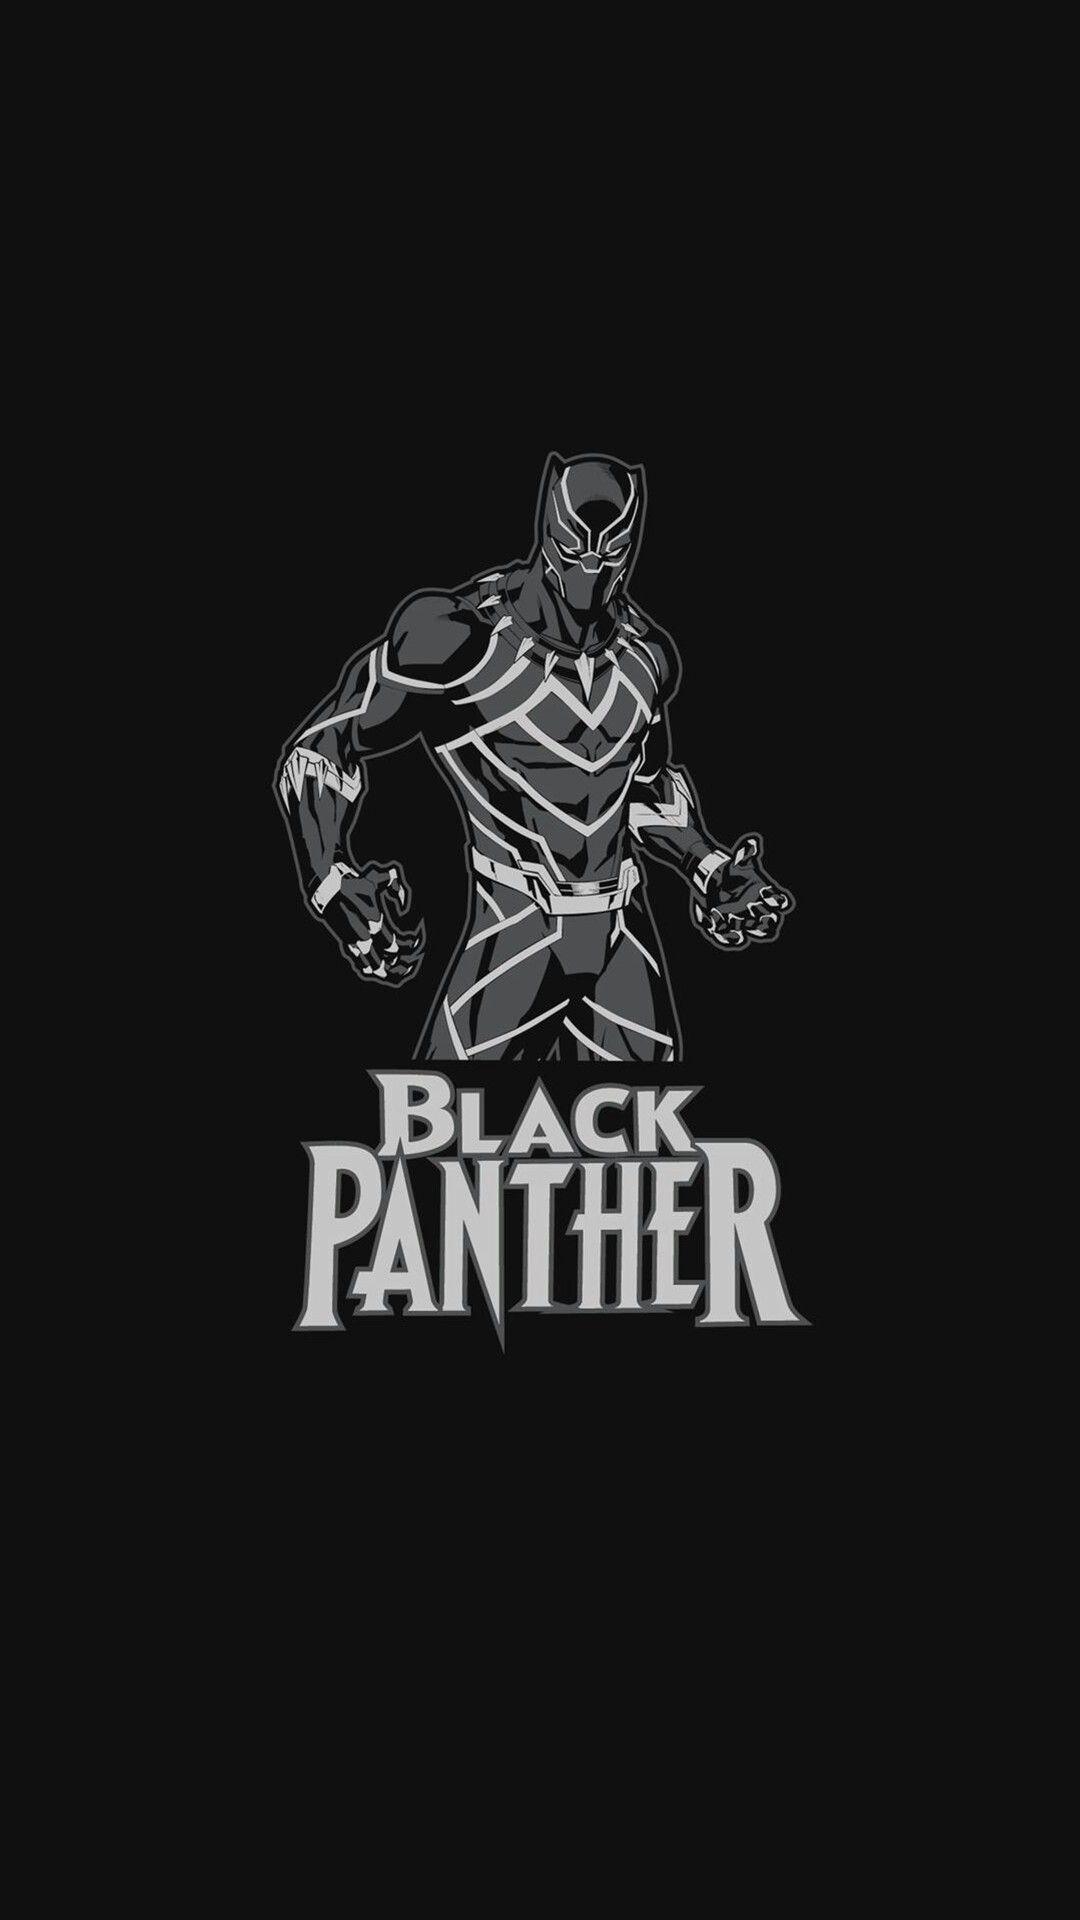 Black panther. Black panther marvel